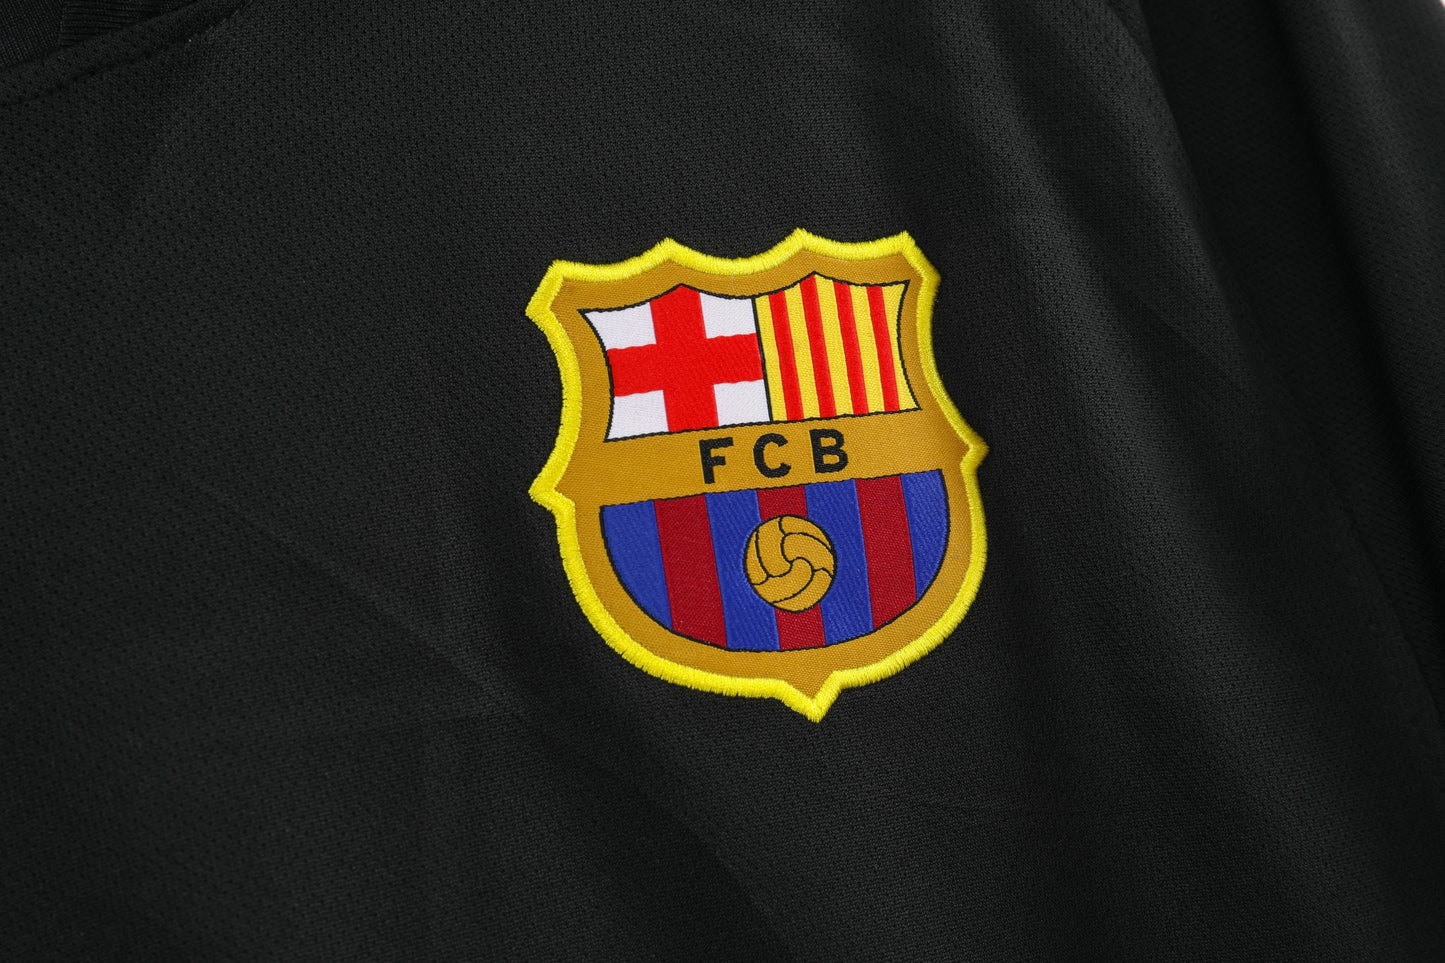 2010/11 Barcelona away games